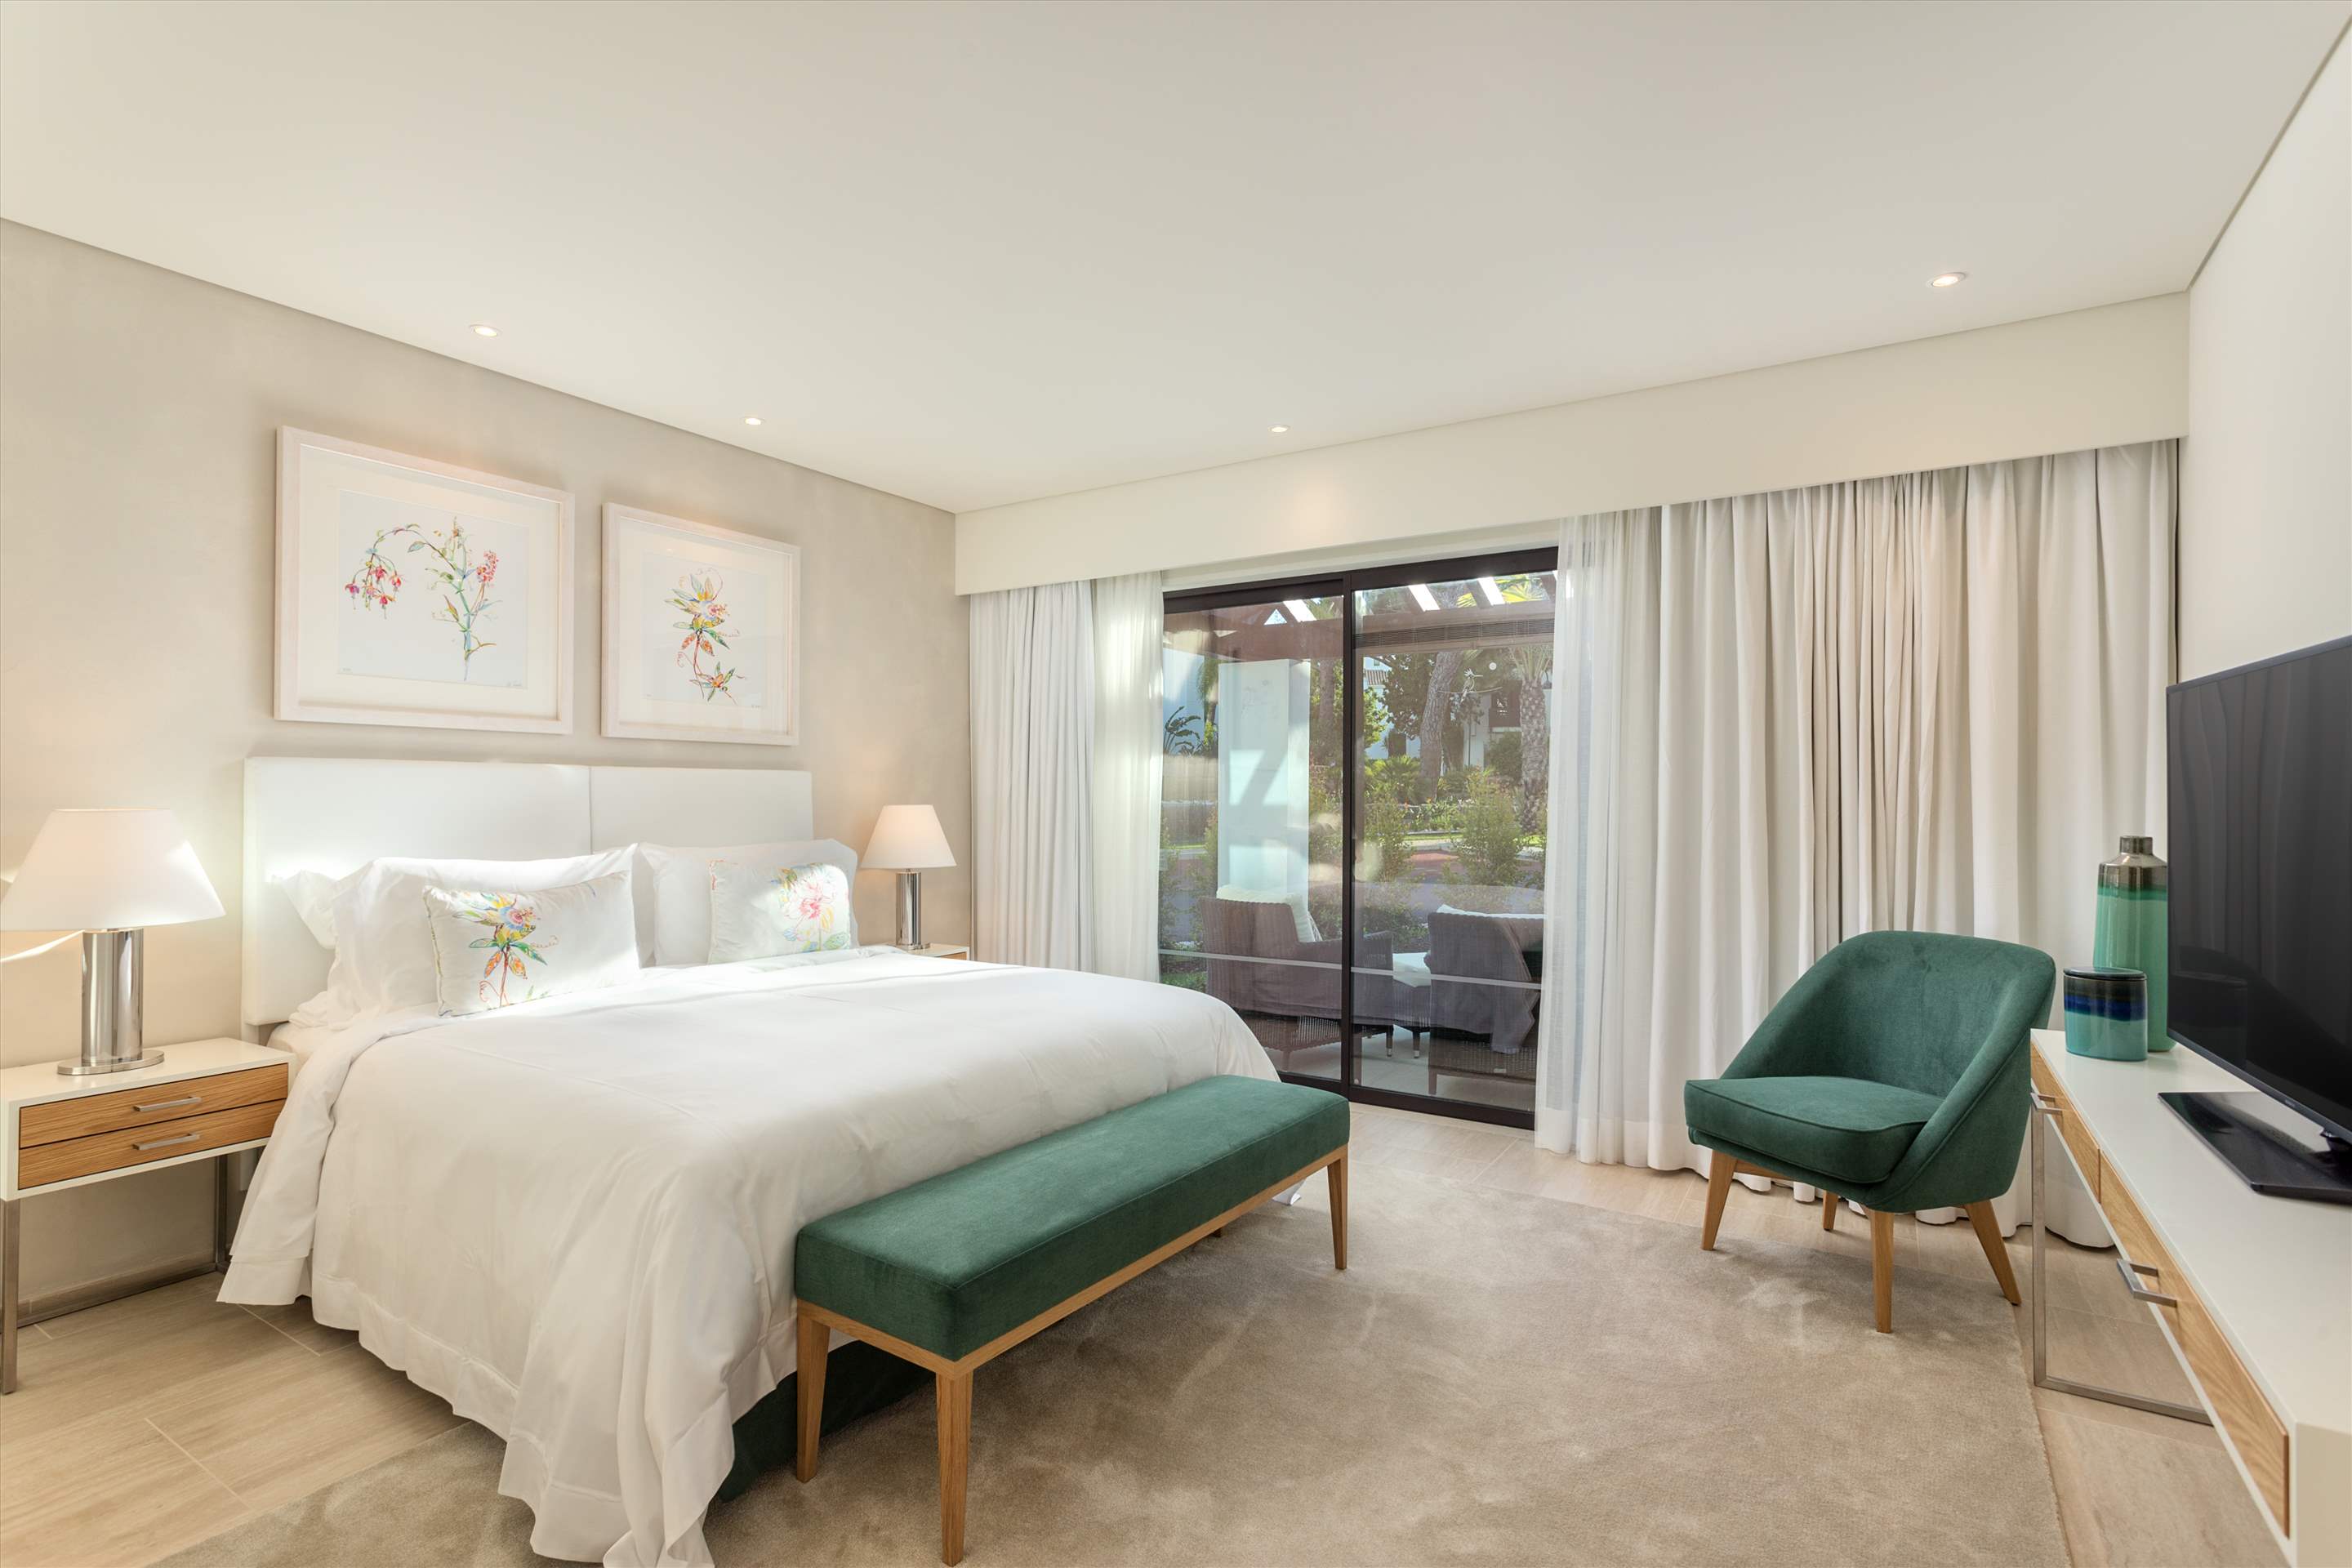 Pine Cliffs Gardens, Three Bedroom Suite, S/C Basis, 3 bedroom apartment in Pine Cliffs Resort, Algarve Photo #20